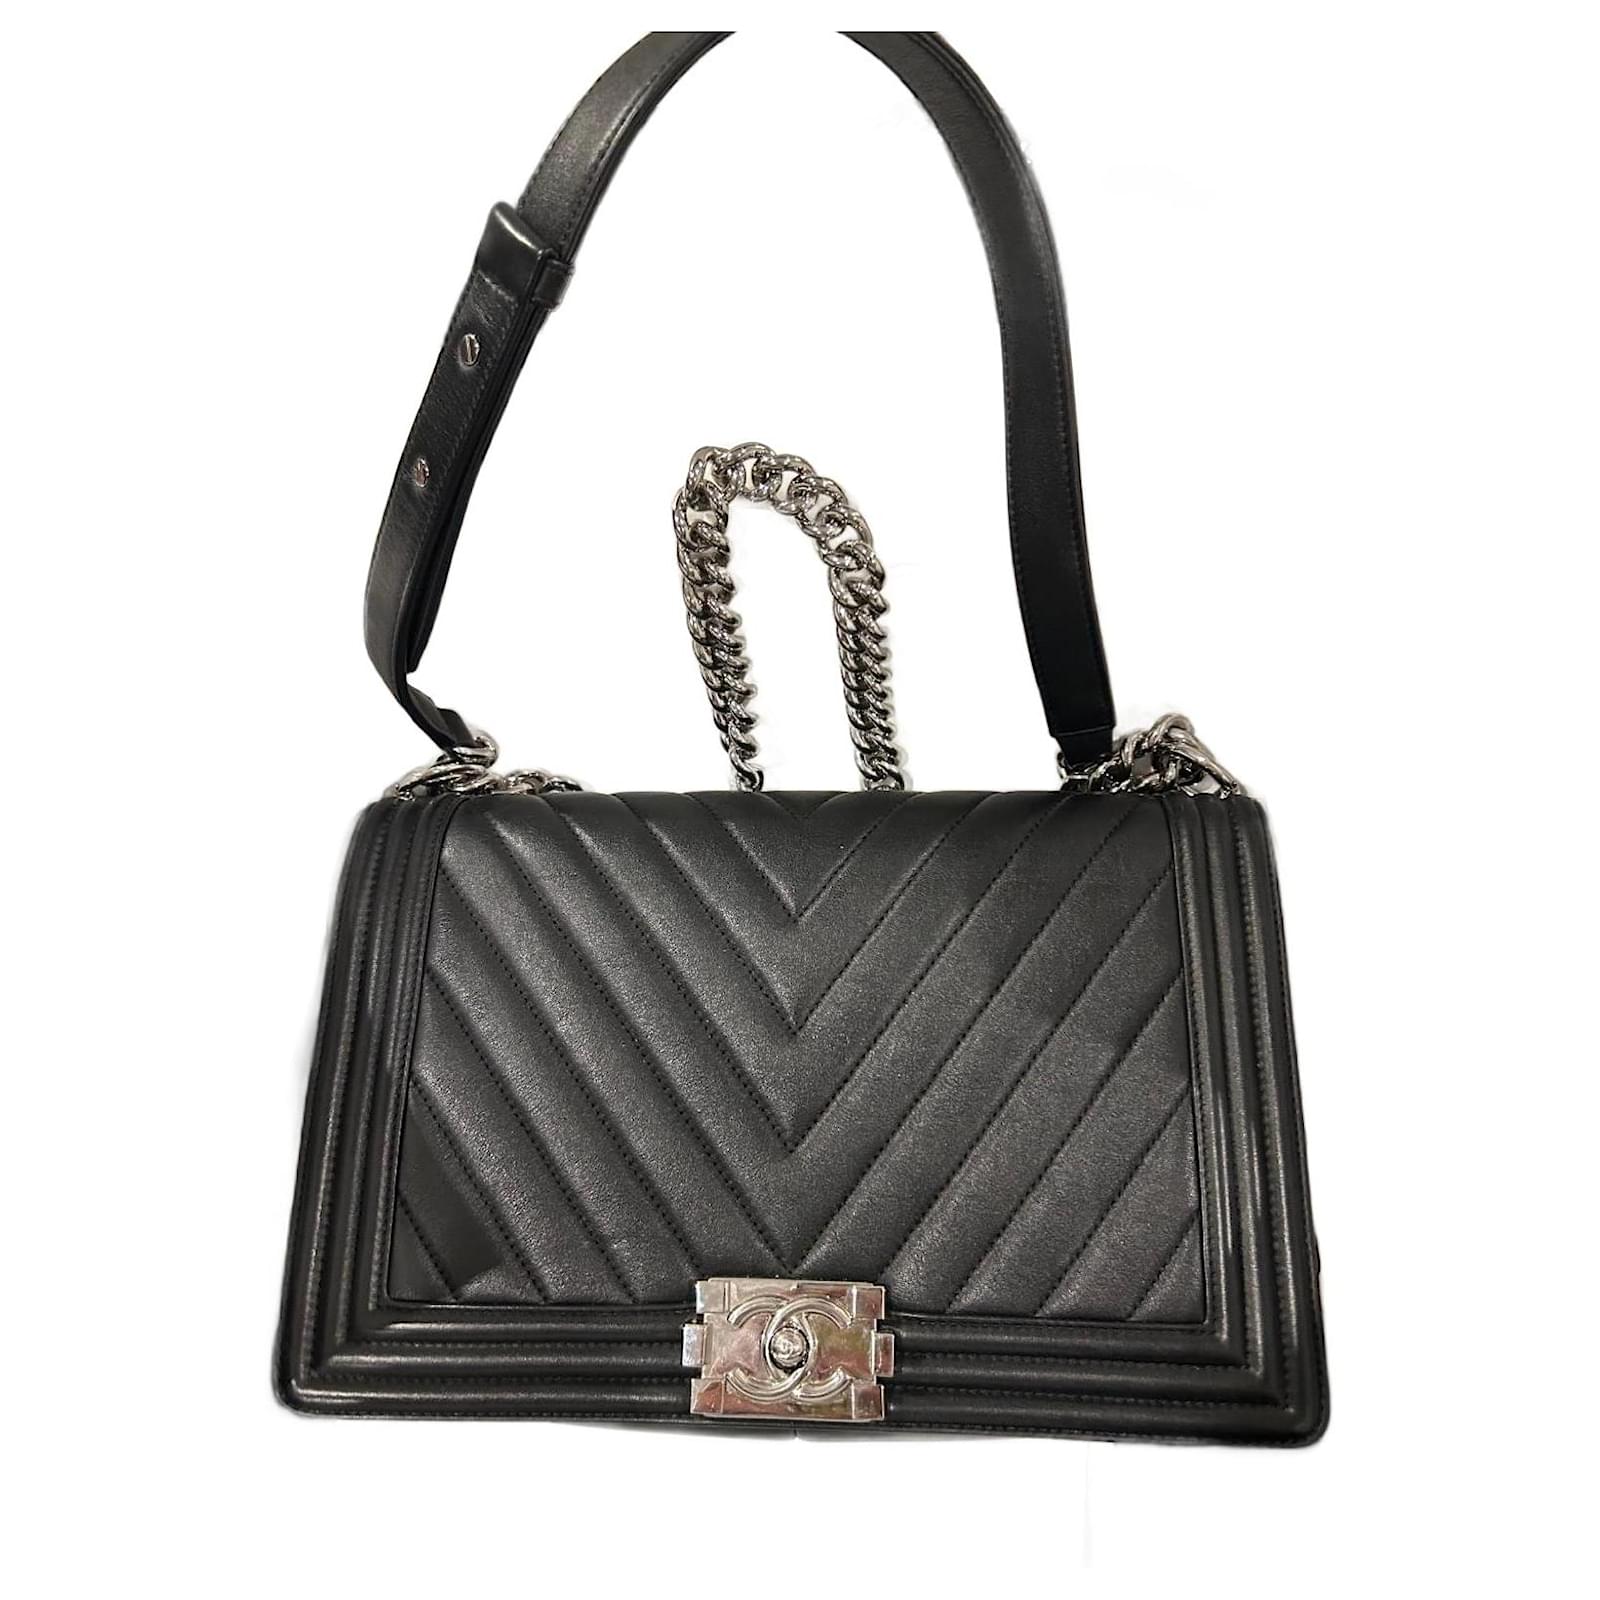 Chanel Patent Leather New Medium Boy Bag, Chanel Handbags